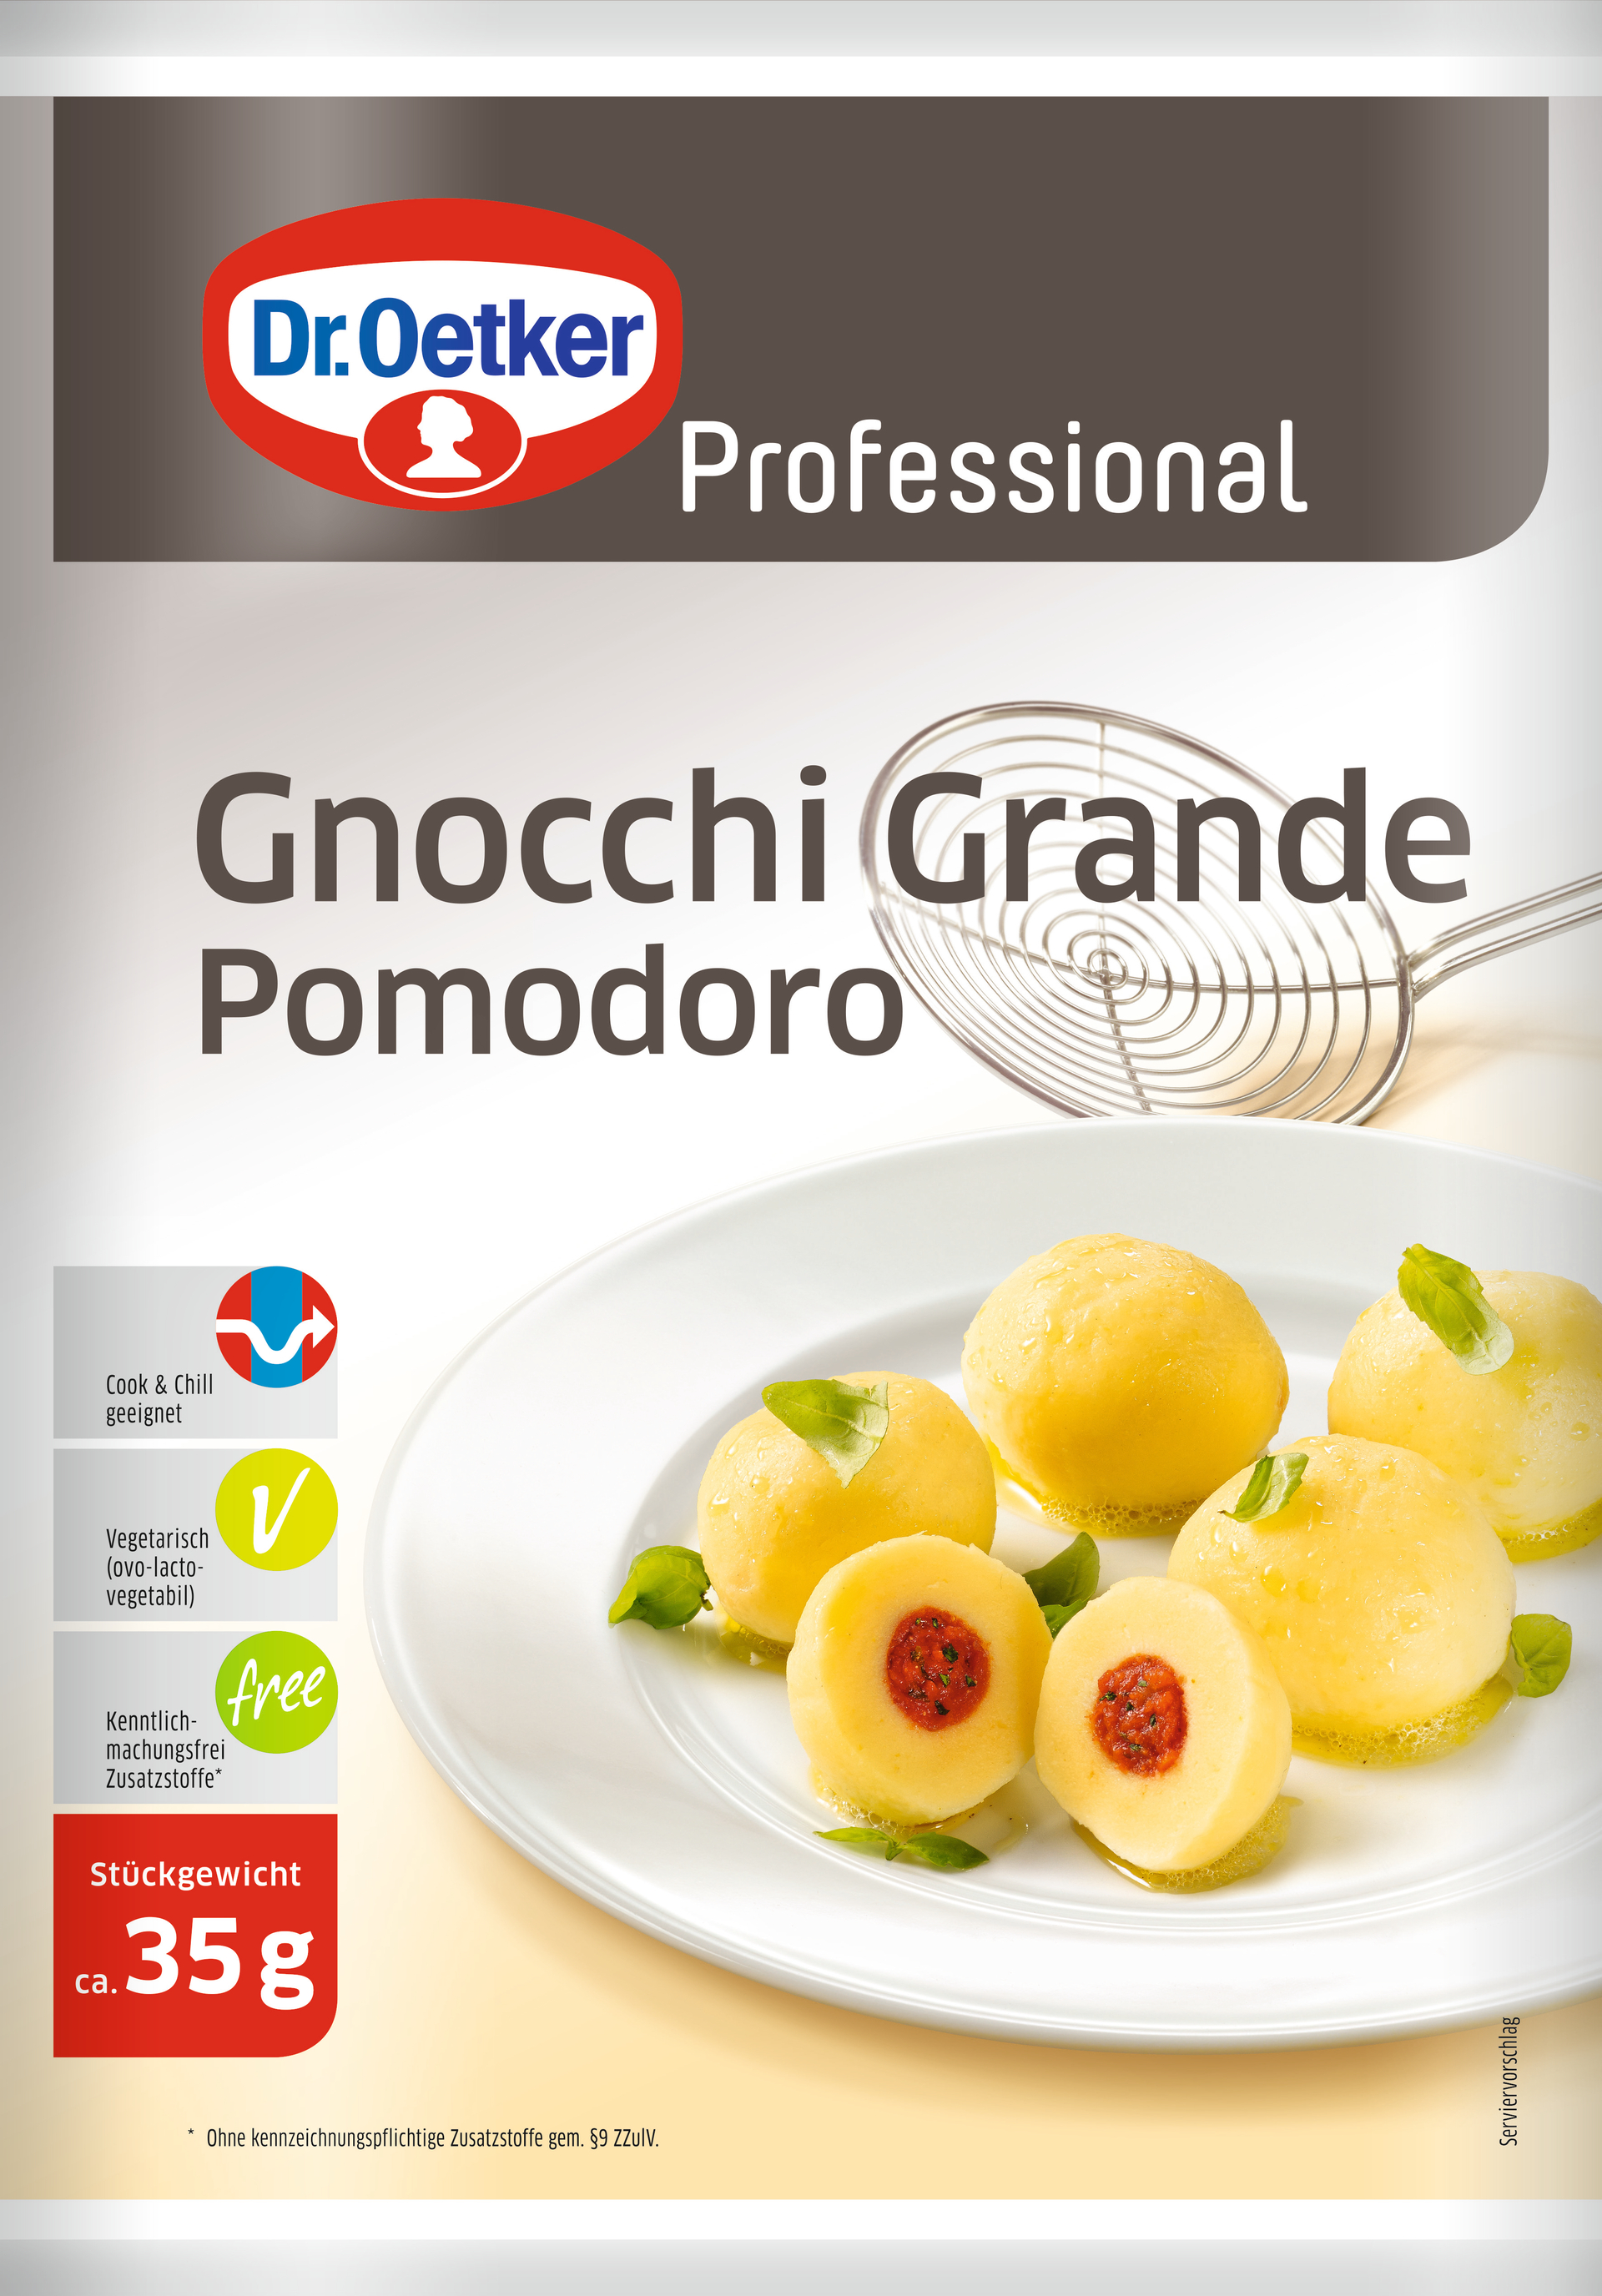 Gnocchi Grande Pomodoro 2500g